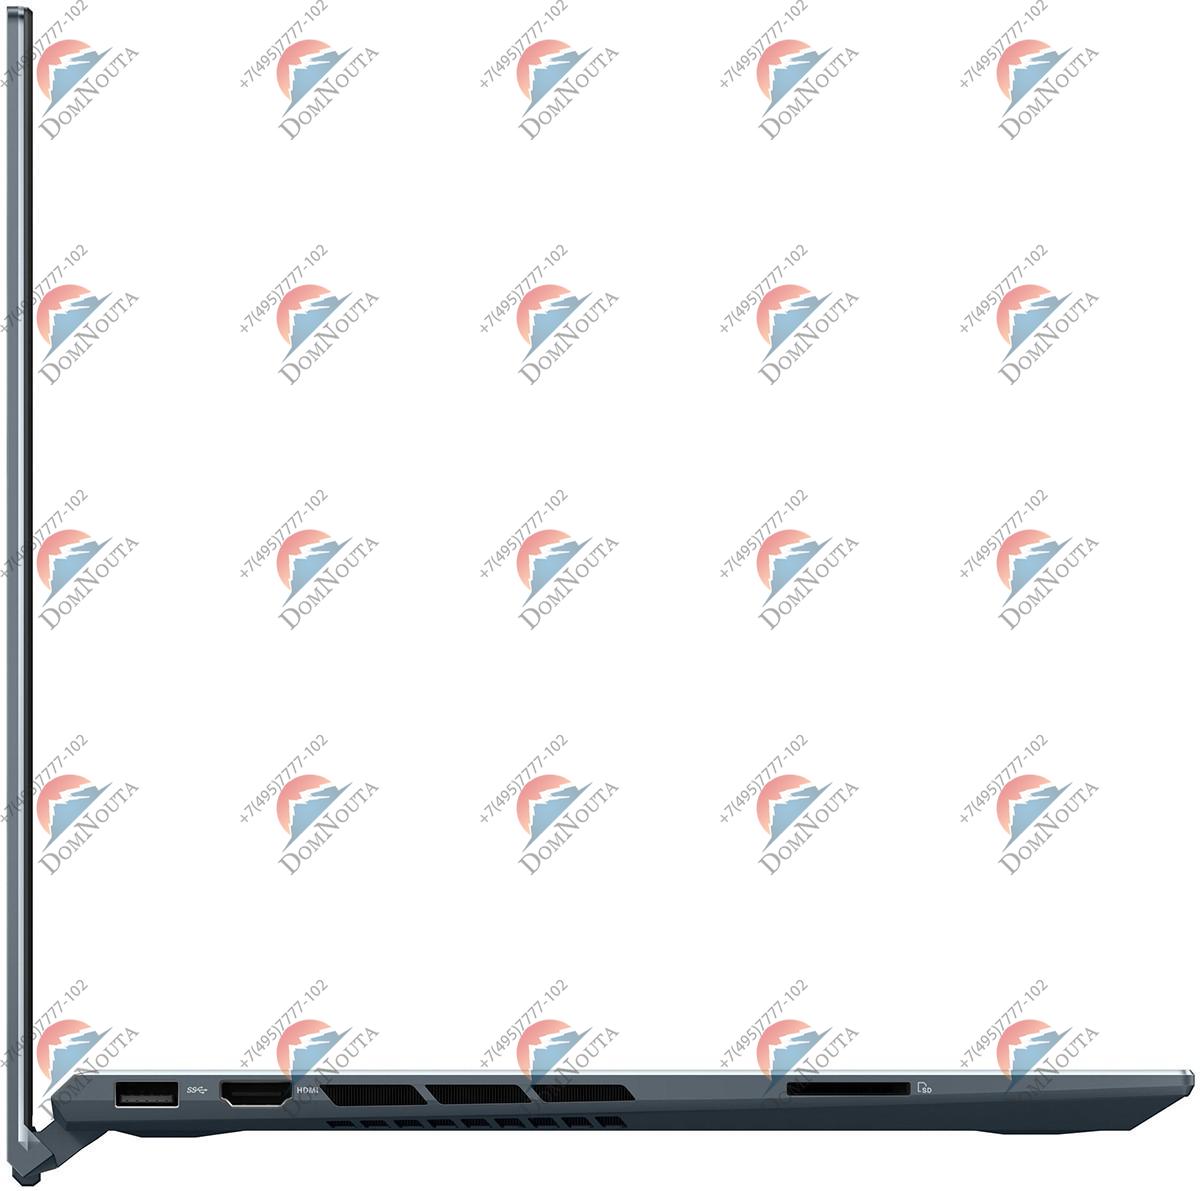 Ноутбук Asus ZENBOOK Pro UM535Qe